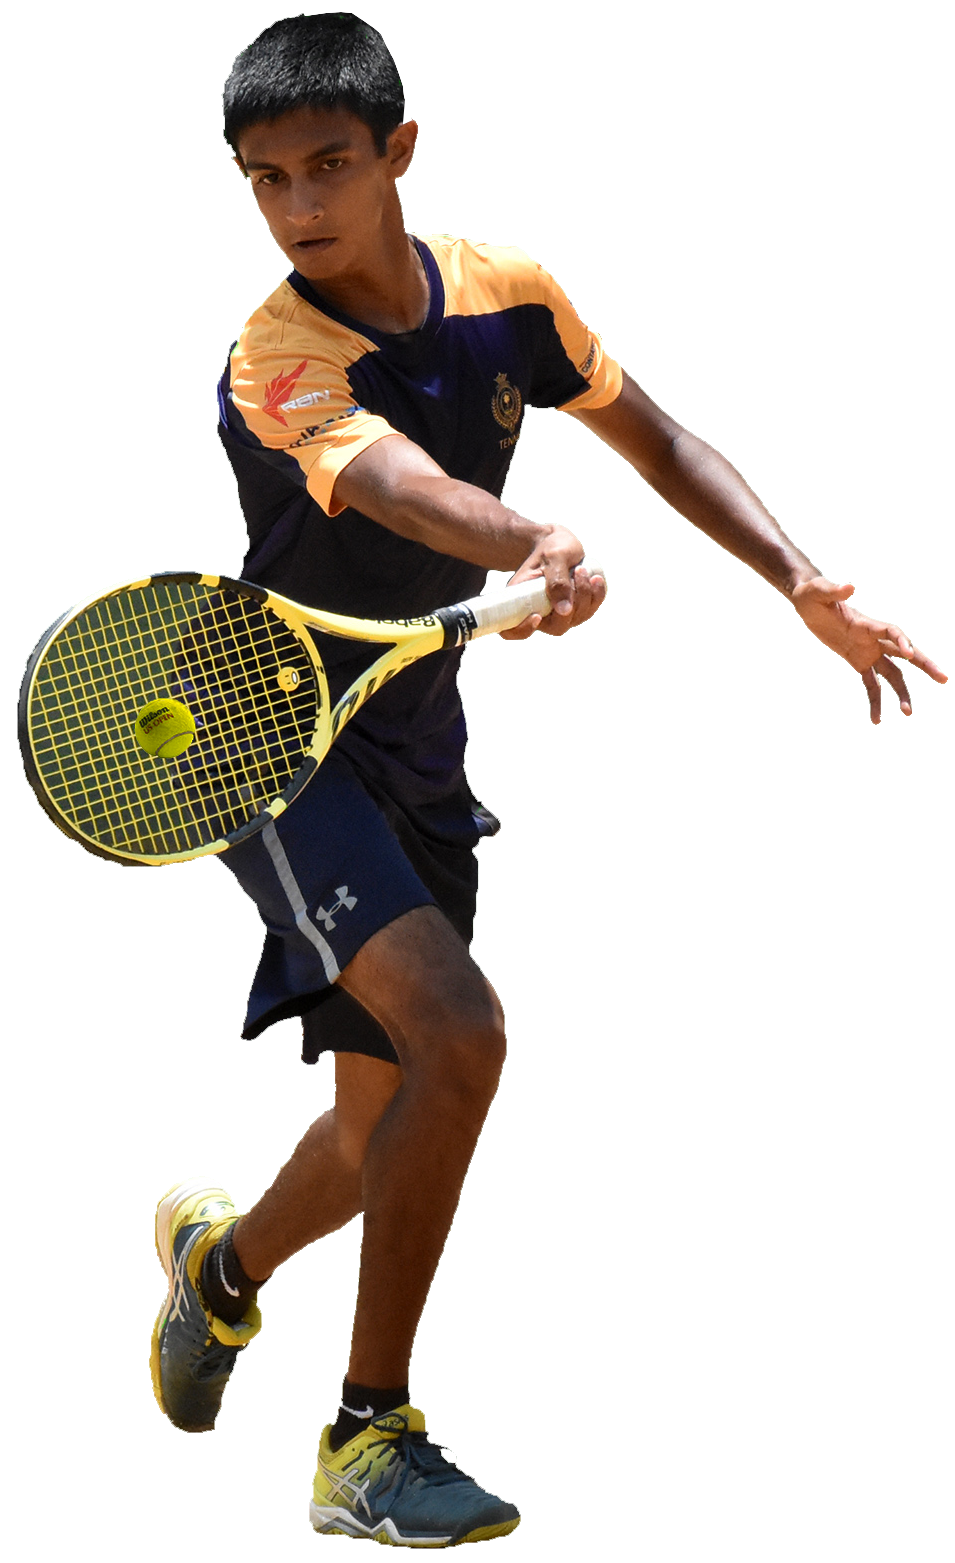 Royal tennis player playing a shot